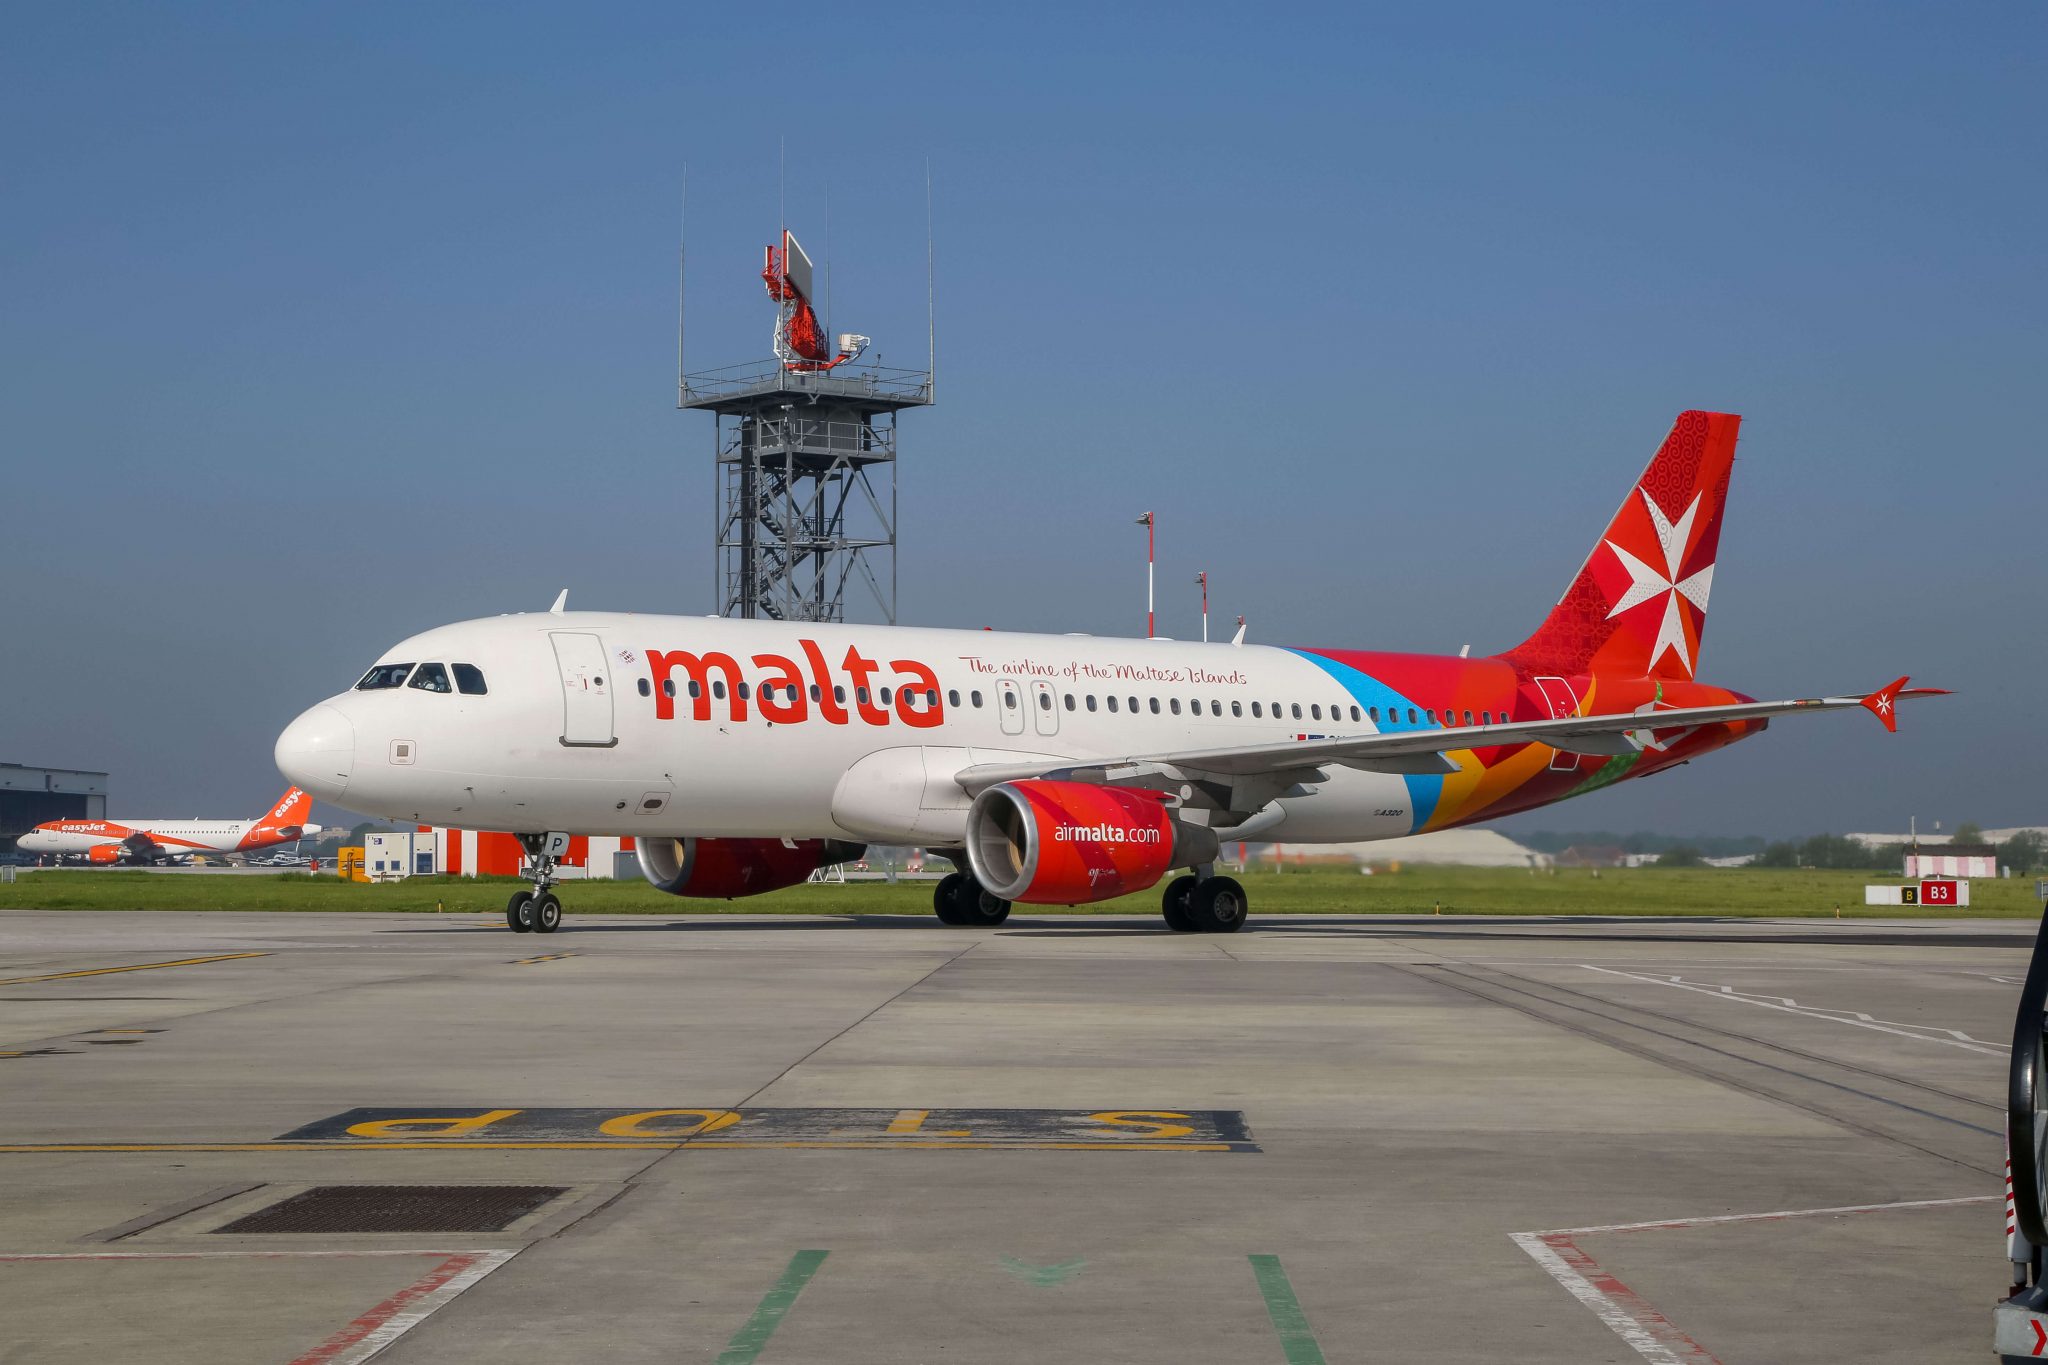 Air Malta adds flights to its winter 2019 schedule